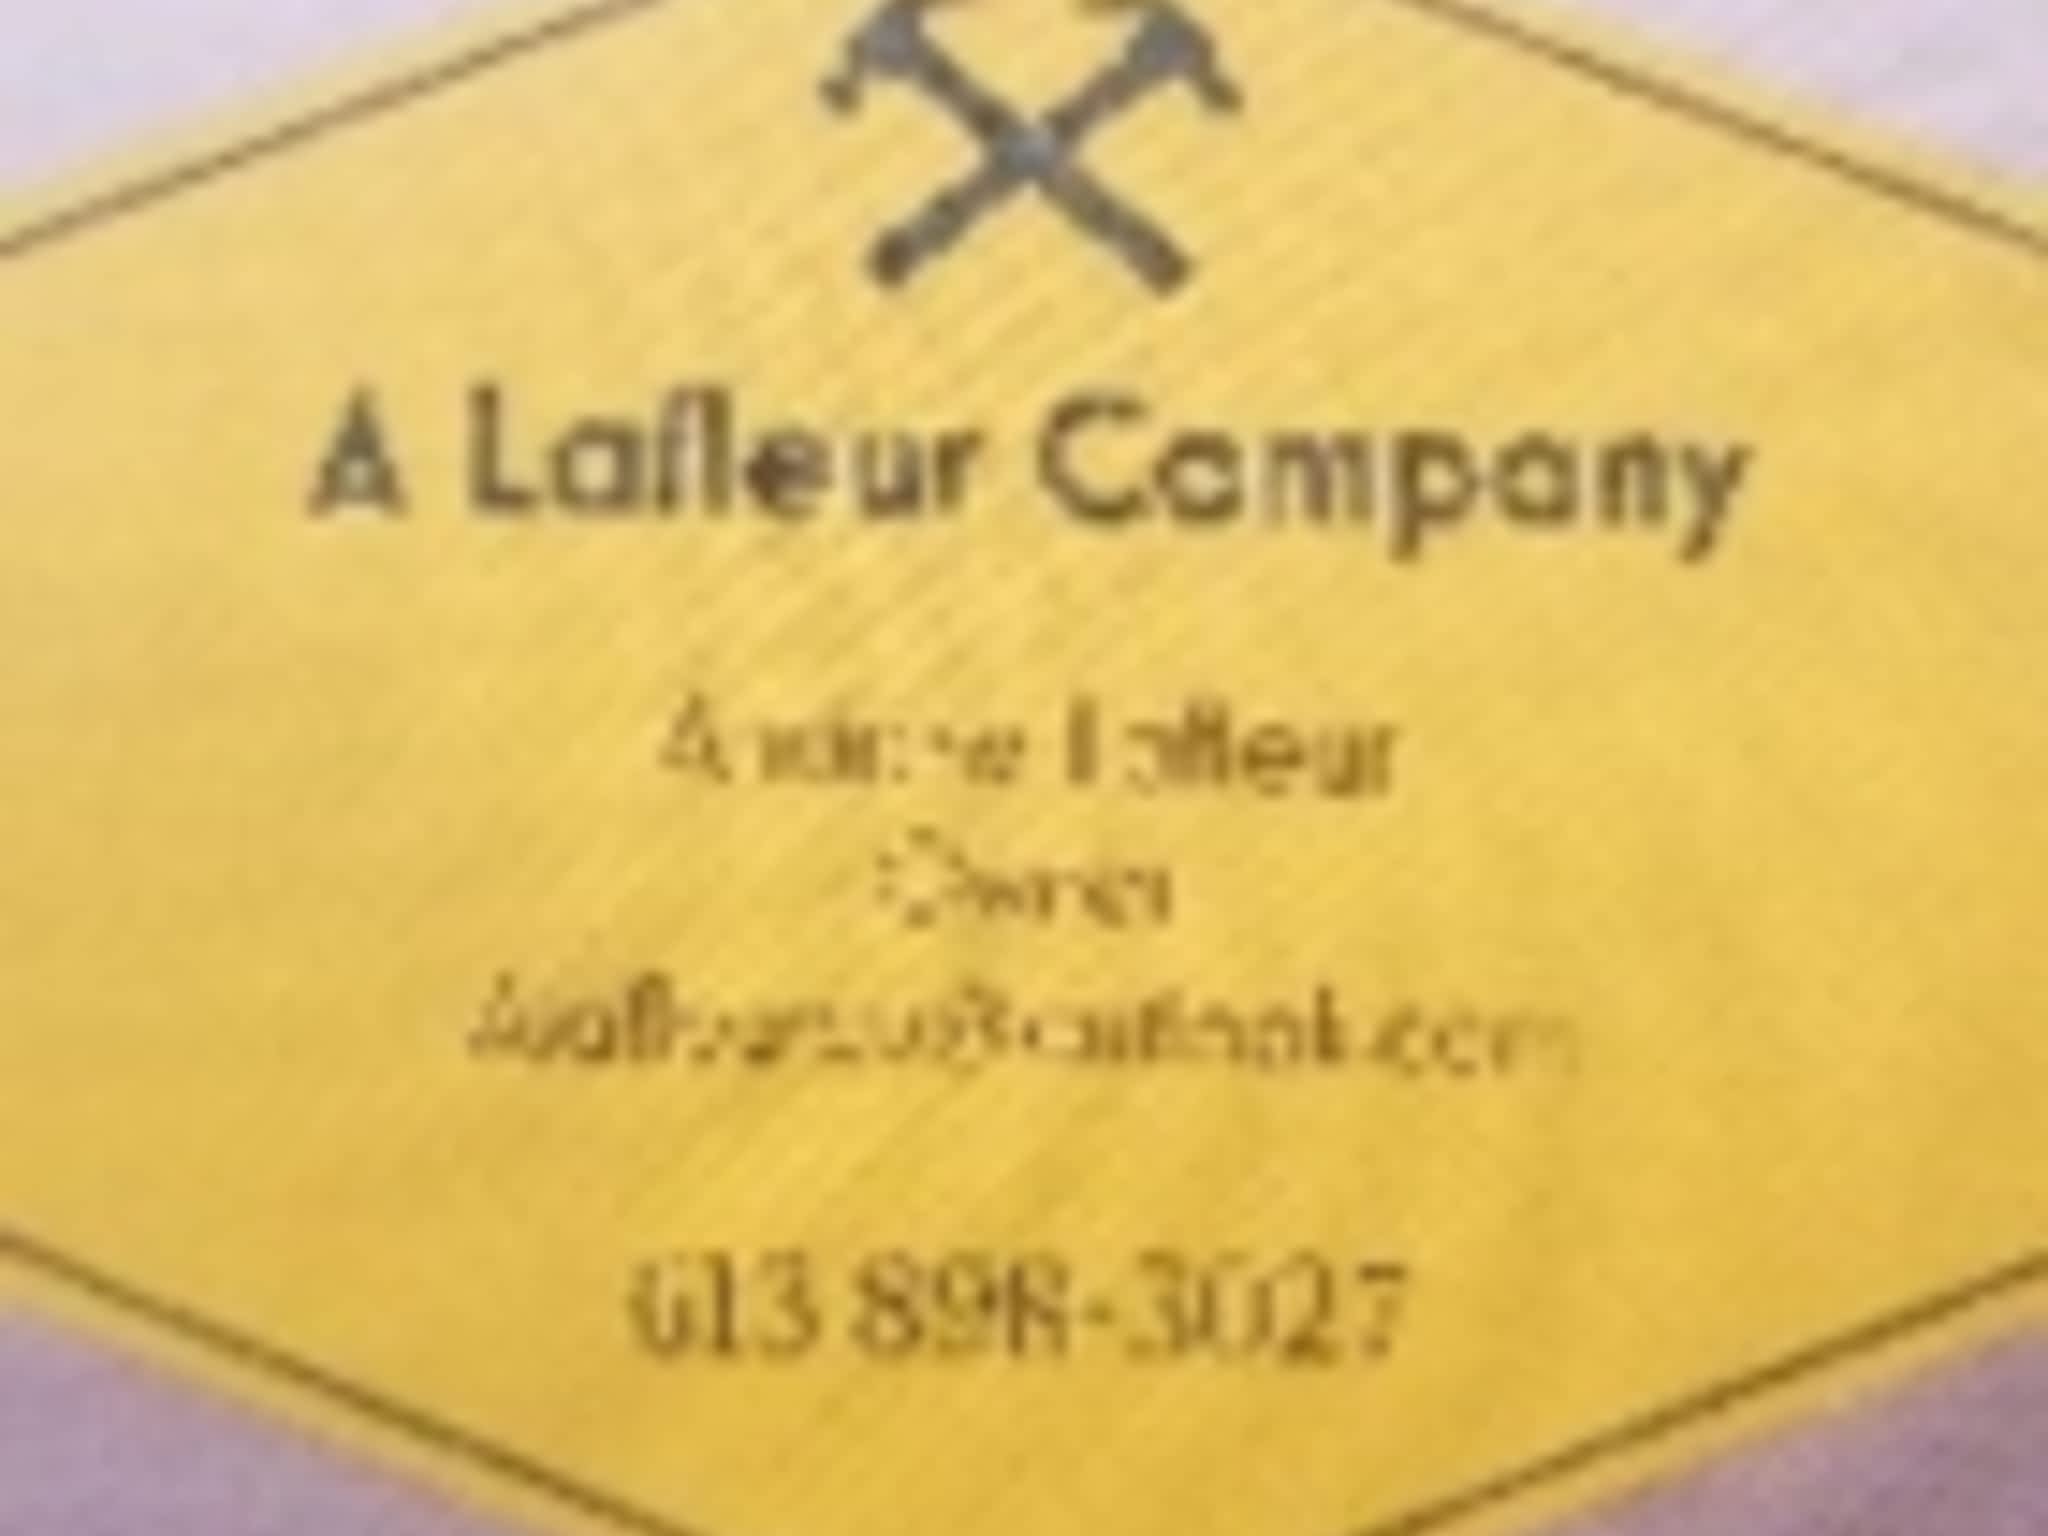 photo A Lafleur Company